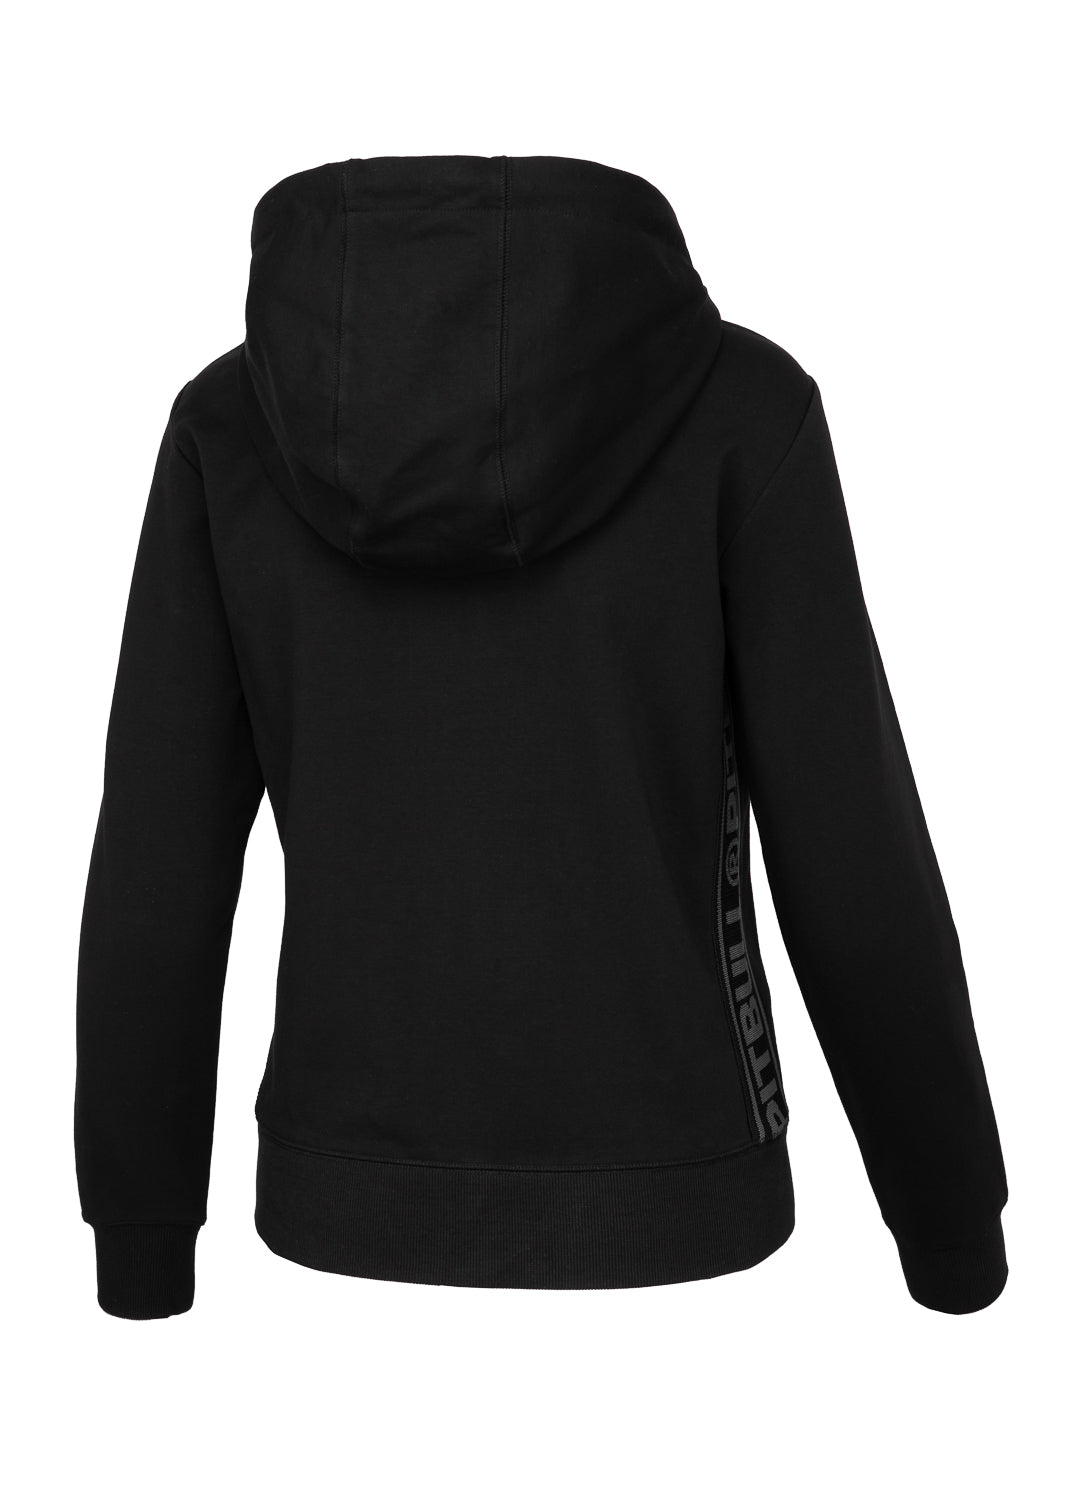 Women's hoodie GENEVA FRENCH TERRY Black - Pitbull West Coast International Store 